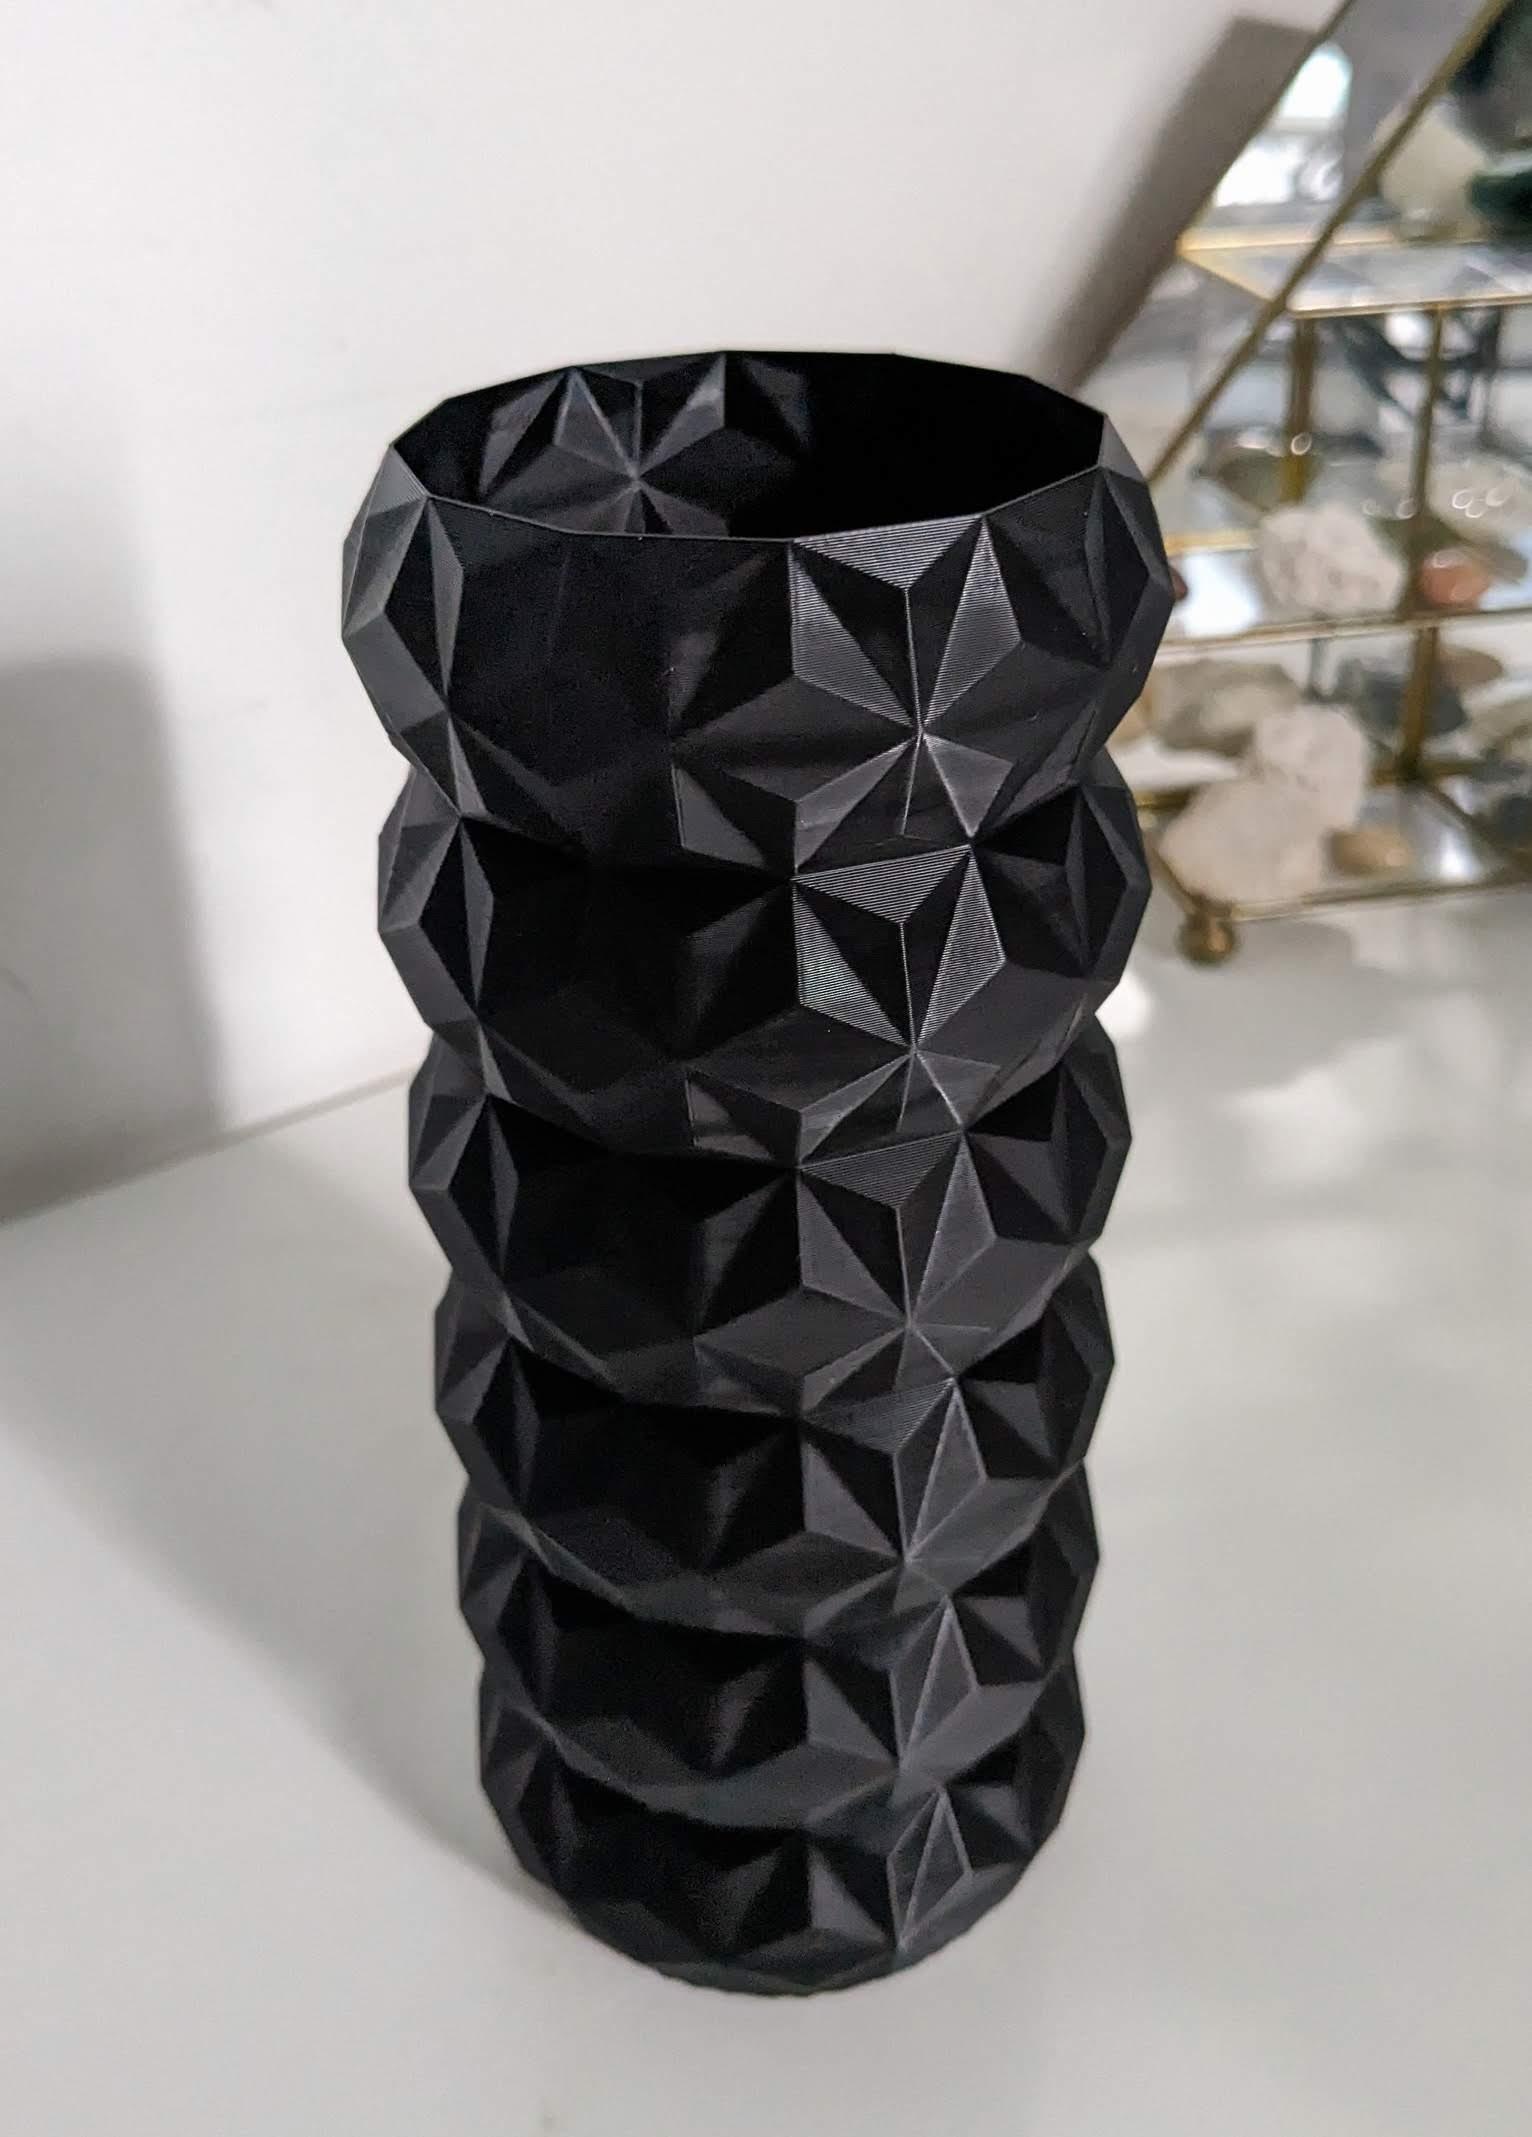 Low poly Vase "off road tire" 3d model